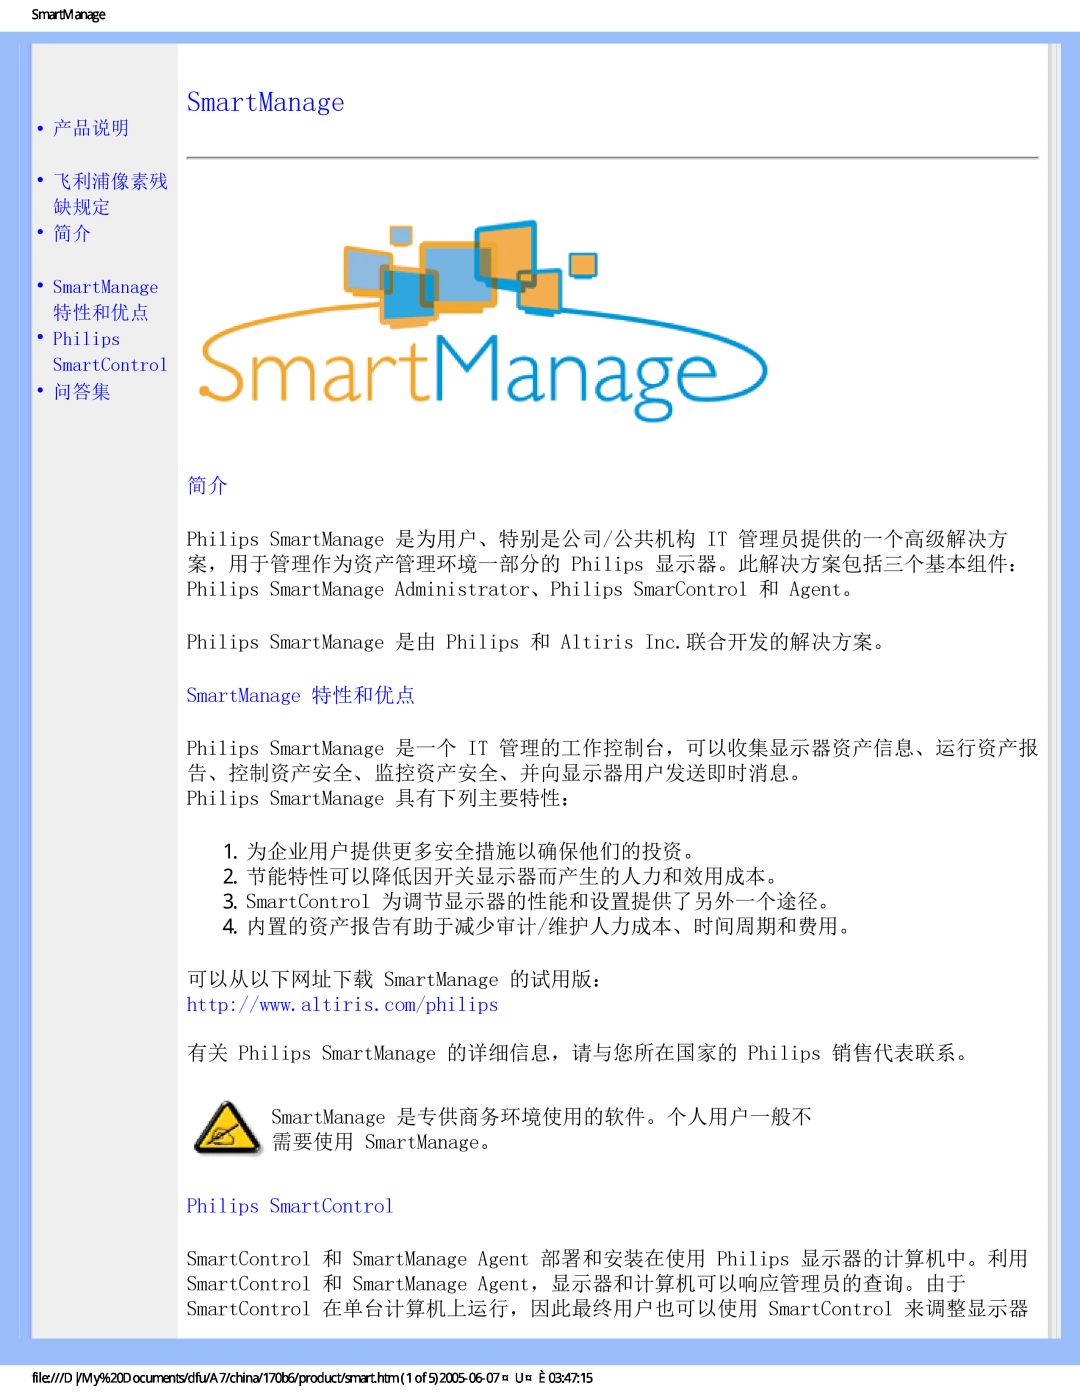 Philips 170B6 user manual SmartManage 特性和优点, Philips SmartControl, 产品说明, 问答集 